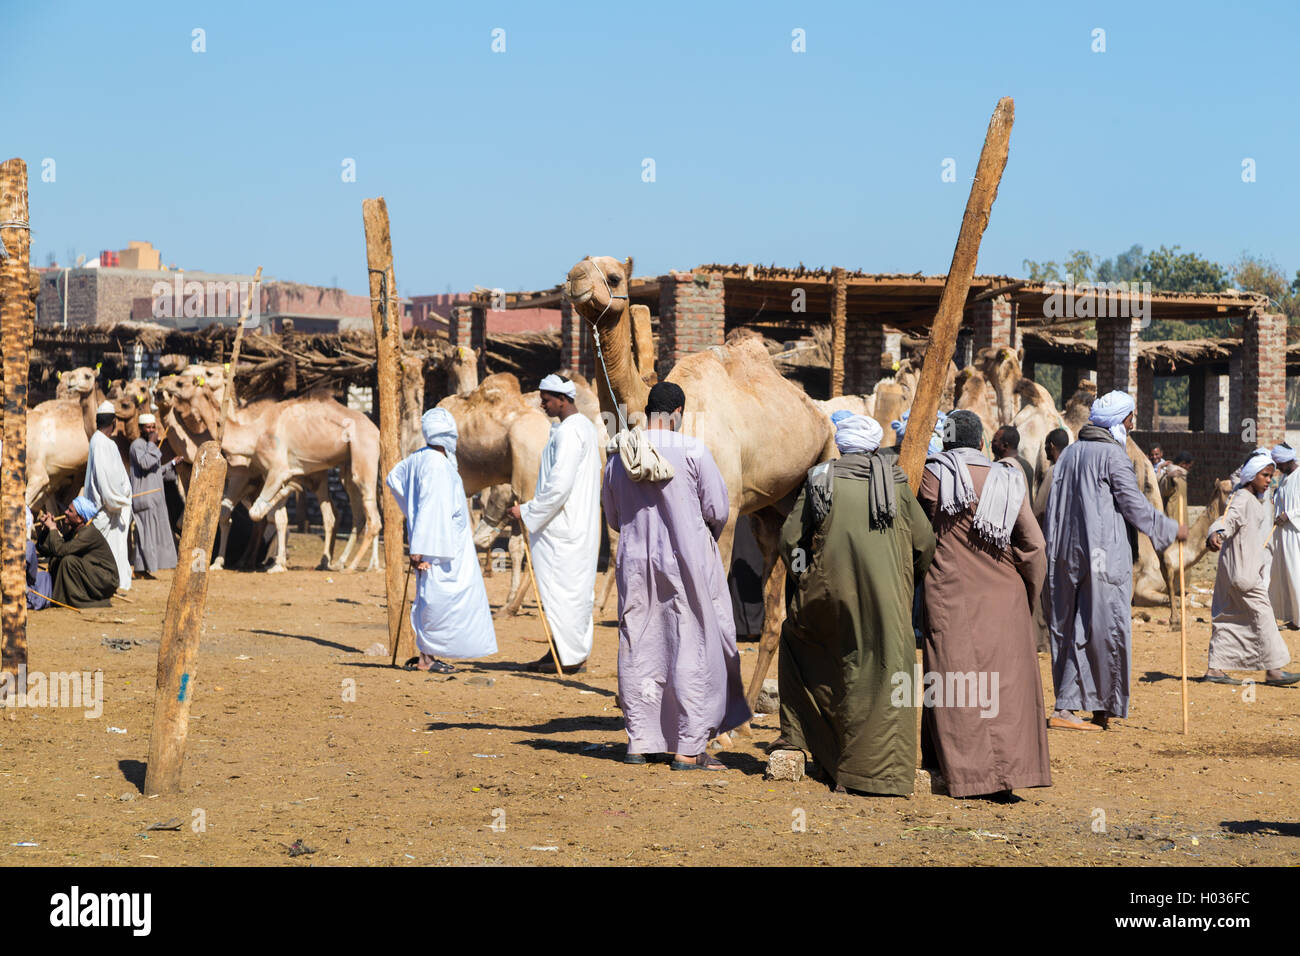 DARAW, EGYPT - FEBRUARY 6, 2016: Local camel salesmen on Camel market. Stock Photo